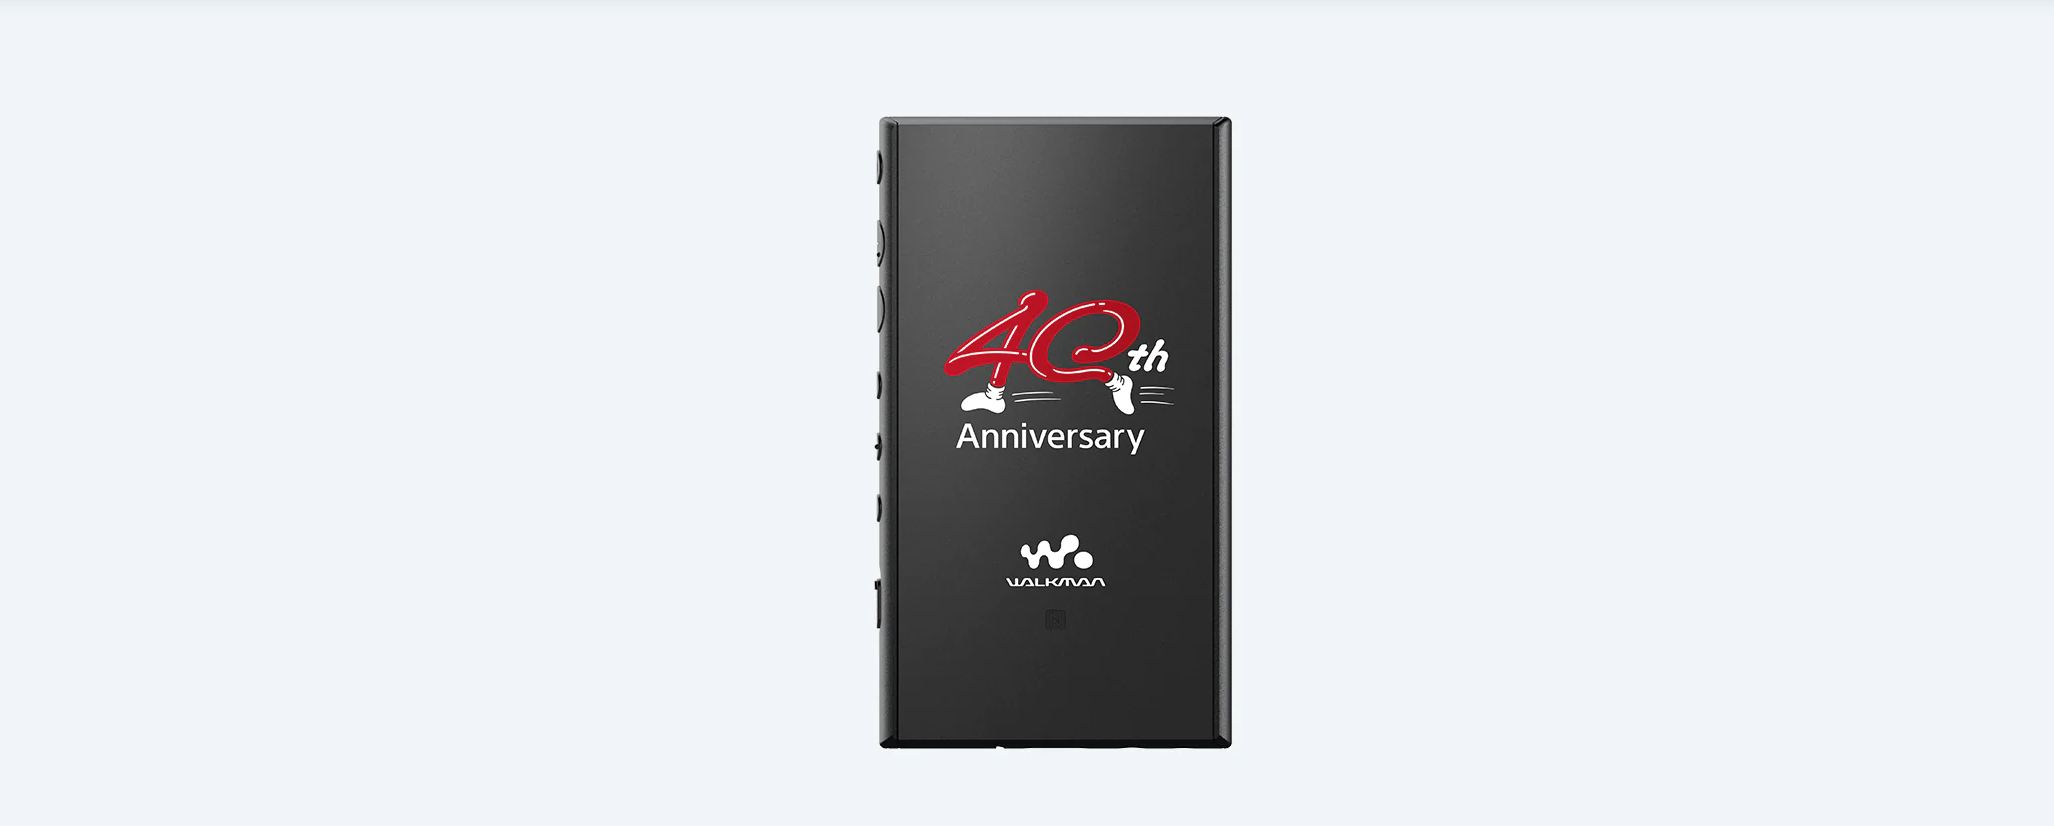 Sony to produce a special 40th anniversary Walkman - ABC News